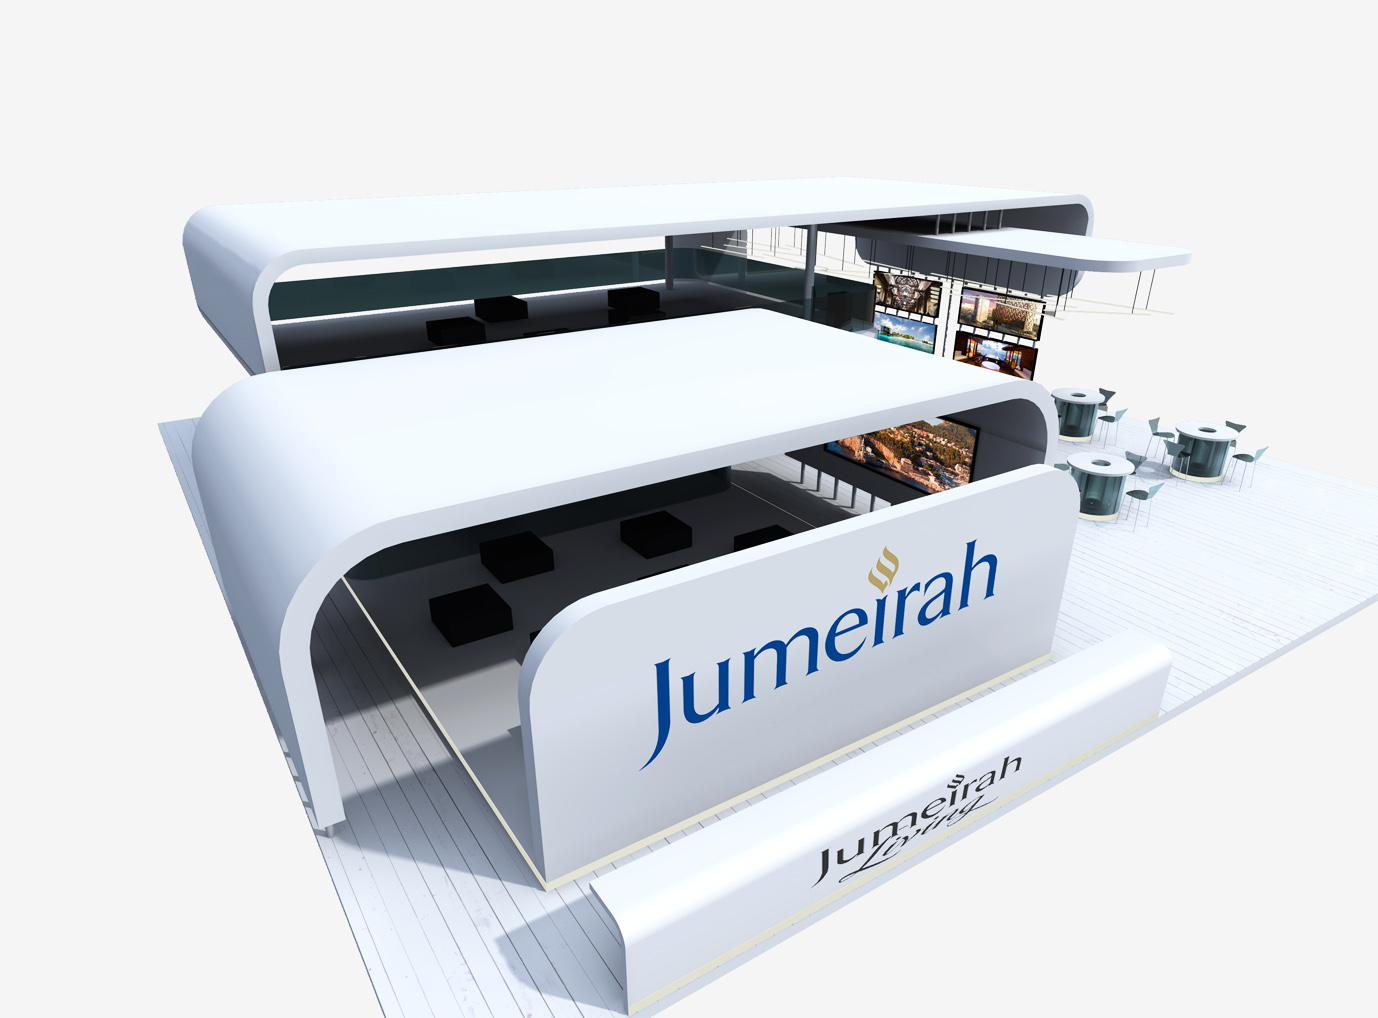 Jumeirah Exhibition Stand Birsdeye Perspective 3